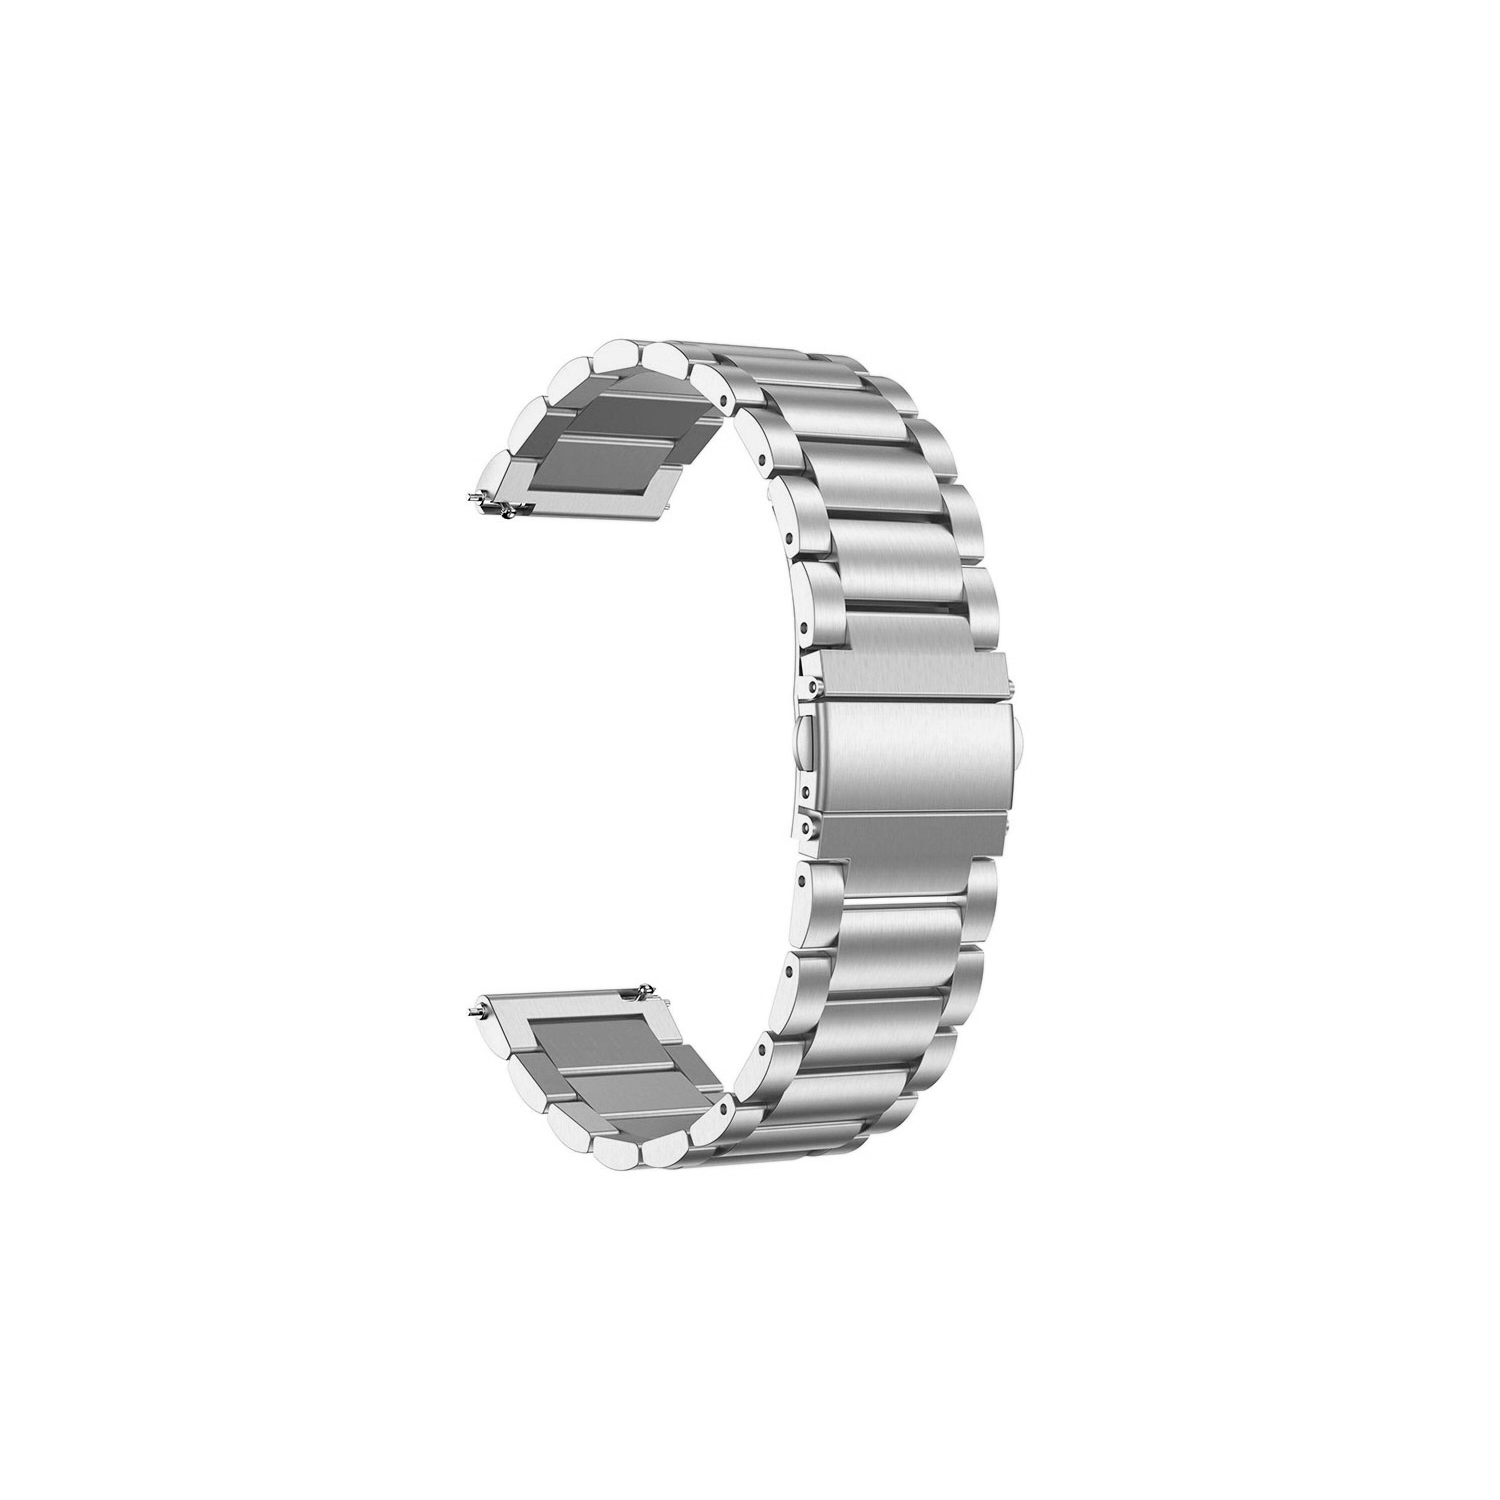 StrapsCo Stainless Steel Oyster Bracelet for Samsung Gear S3 Frontier - Silver